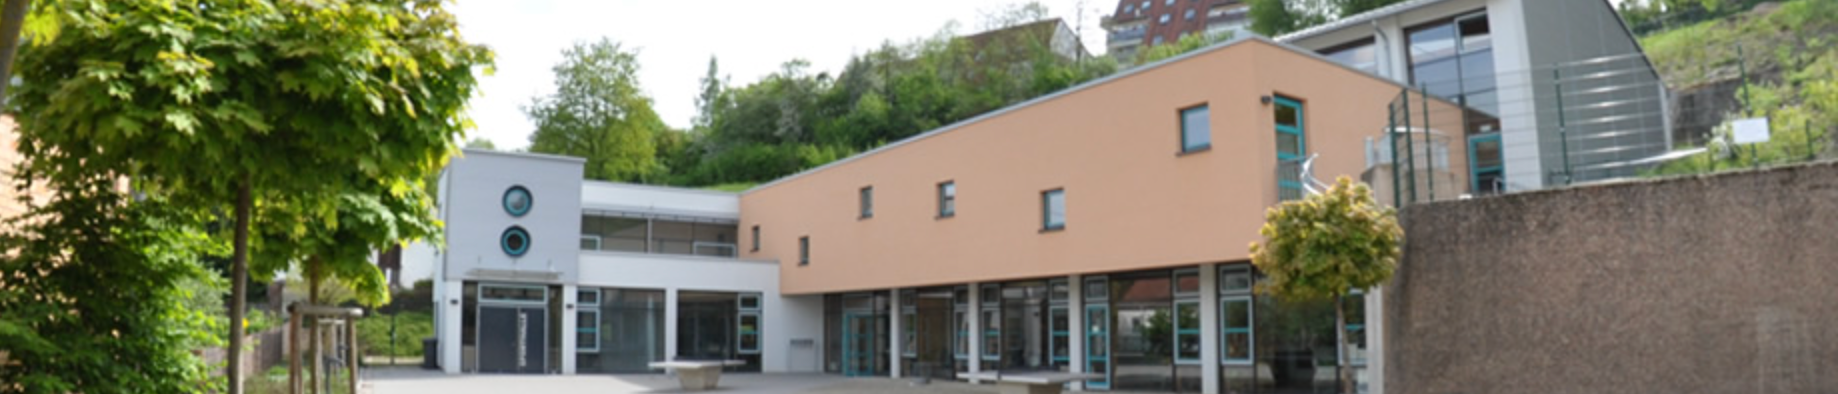 Peter-Wust-Gymnasium Merzig